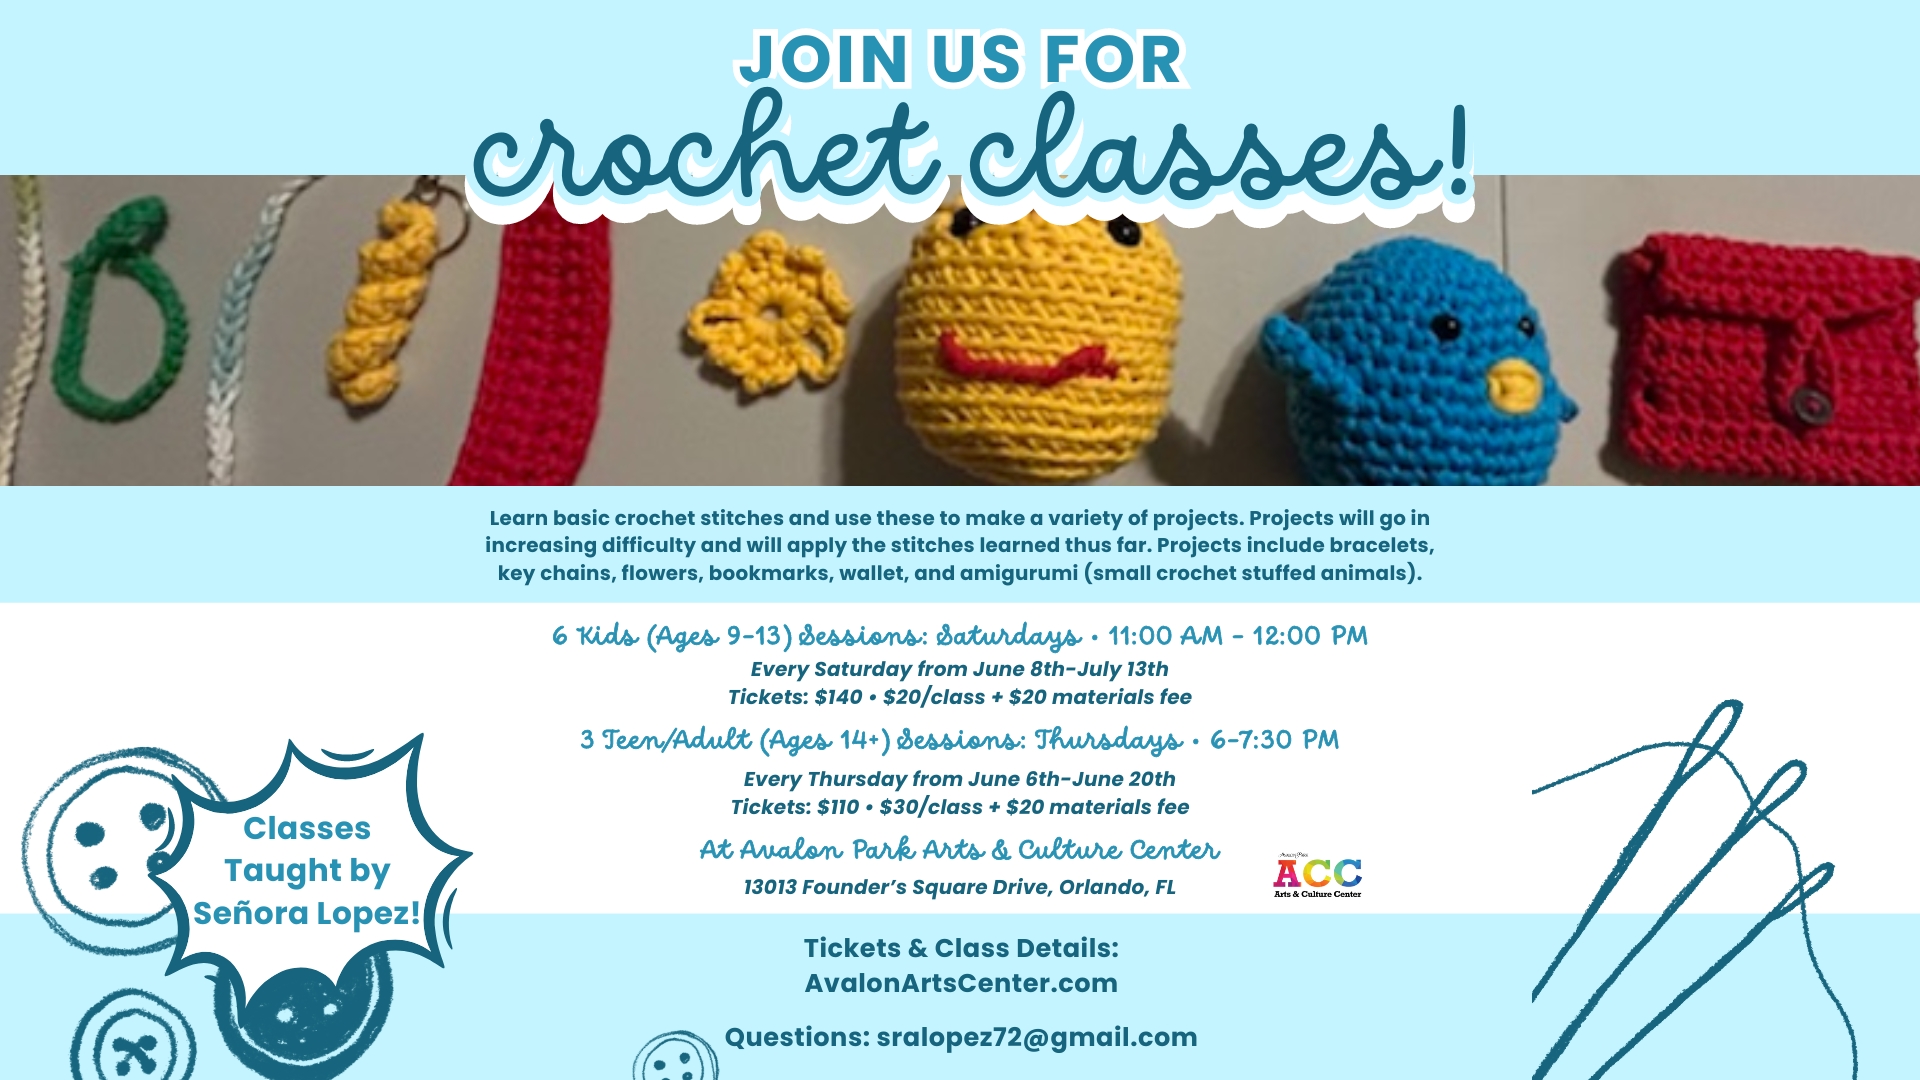 Crochet Classes at ACC